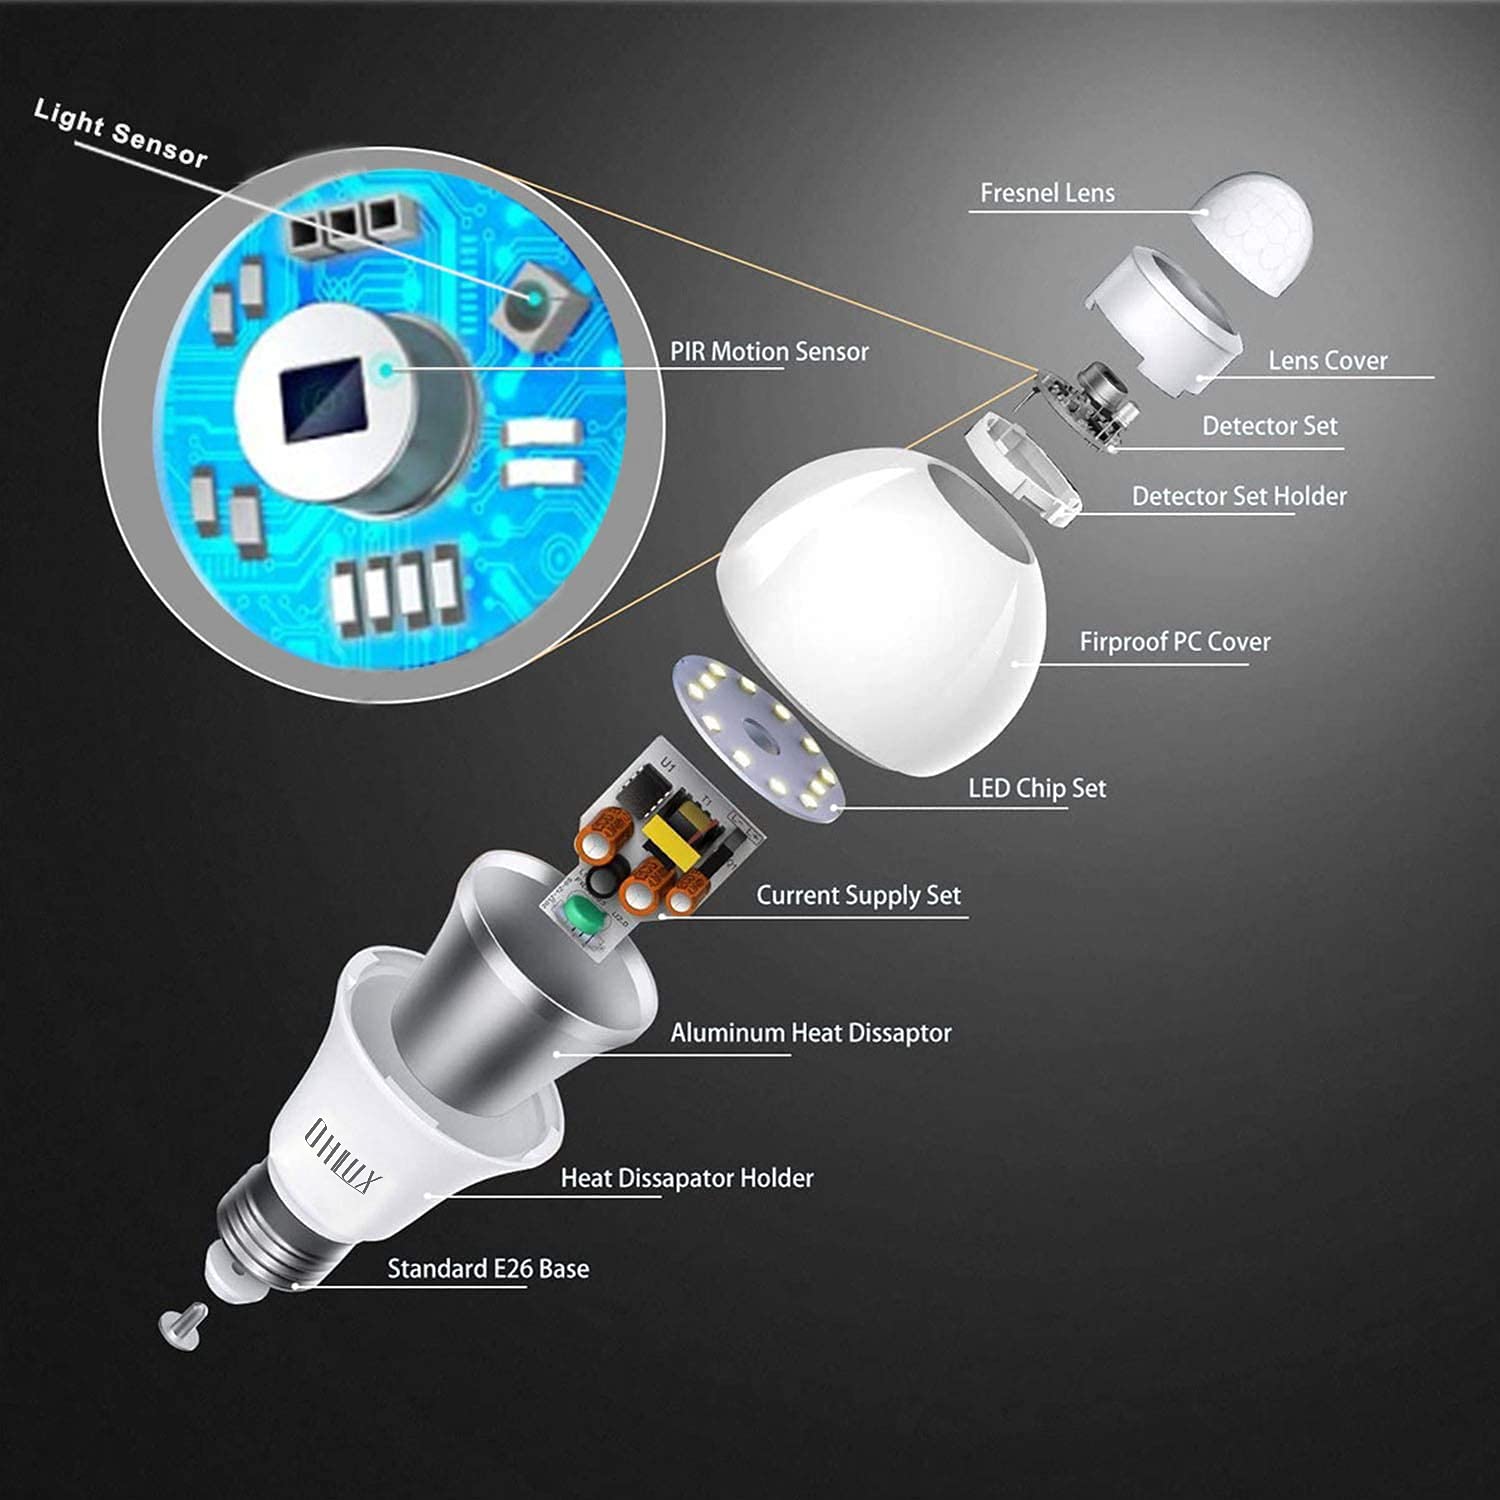 OHLUX Motion Sensor Bulbs and Smart Light Bulbs Bundle Package